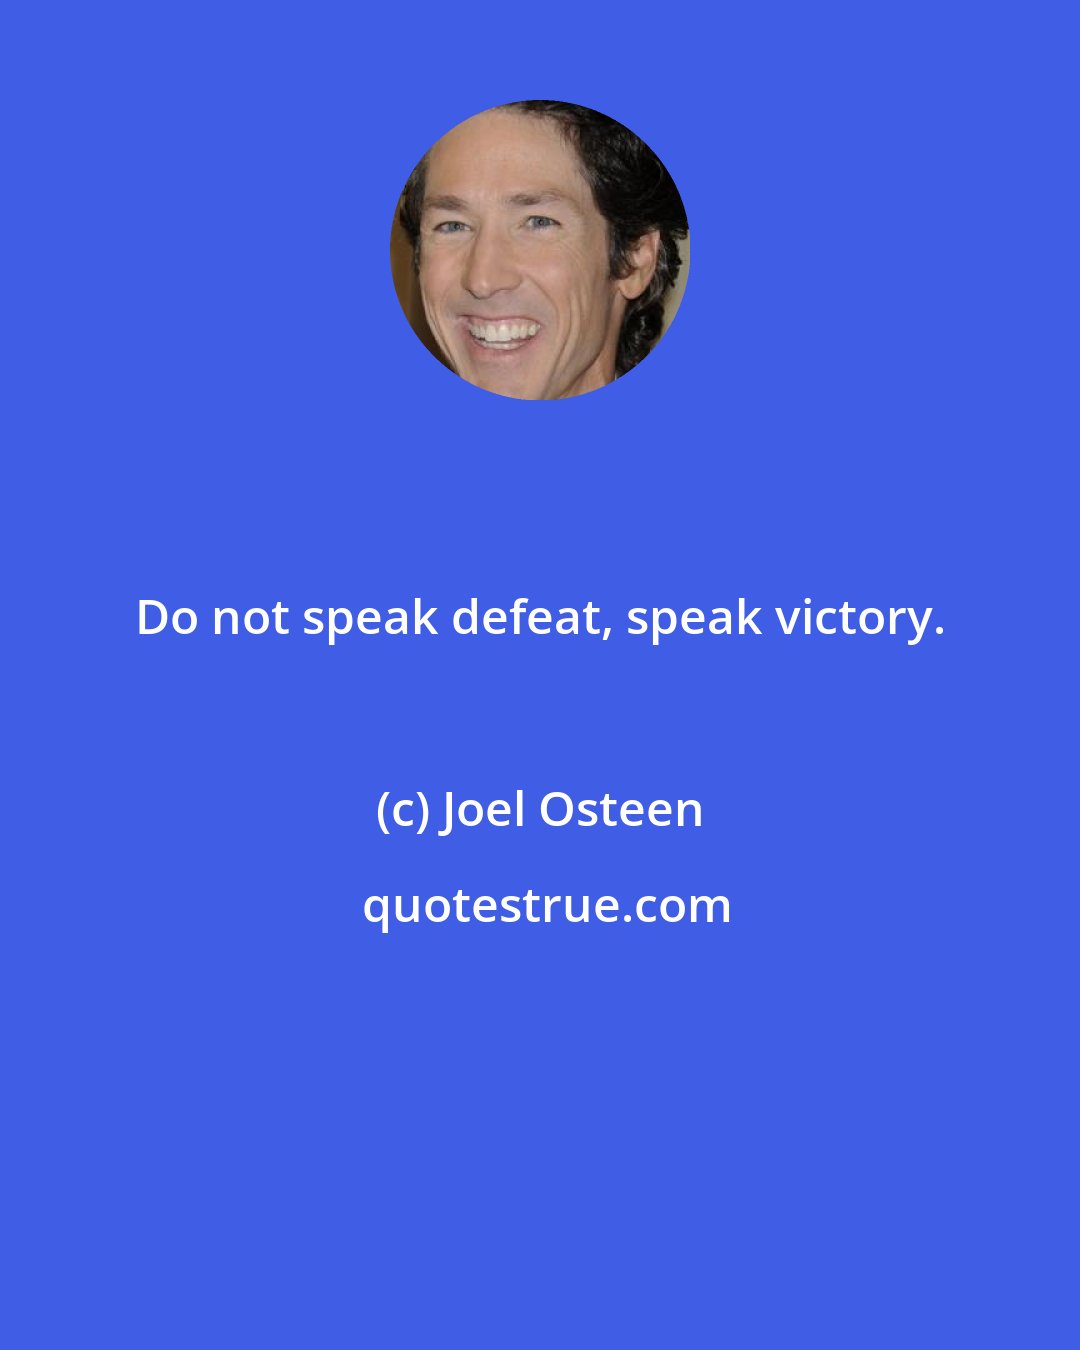 Joel Osteen: Do not speak defeat, speak victory.